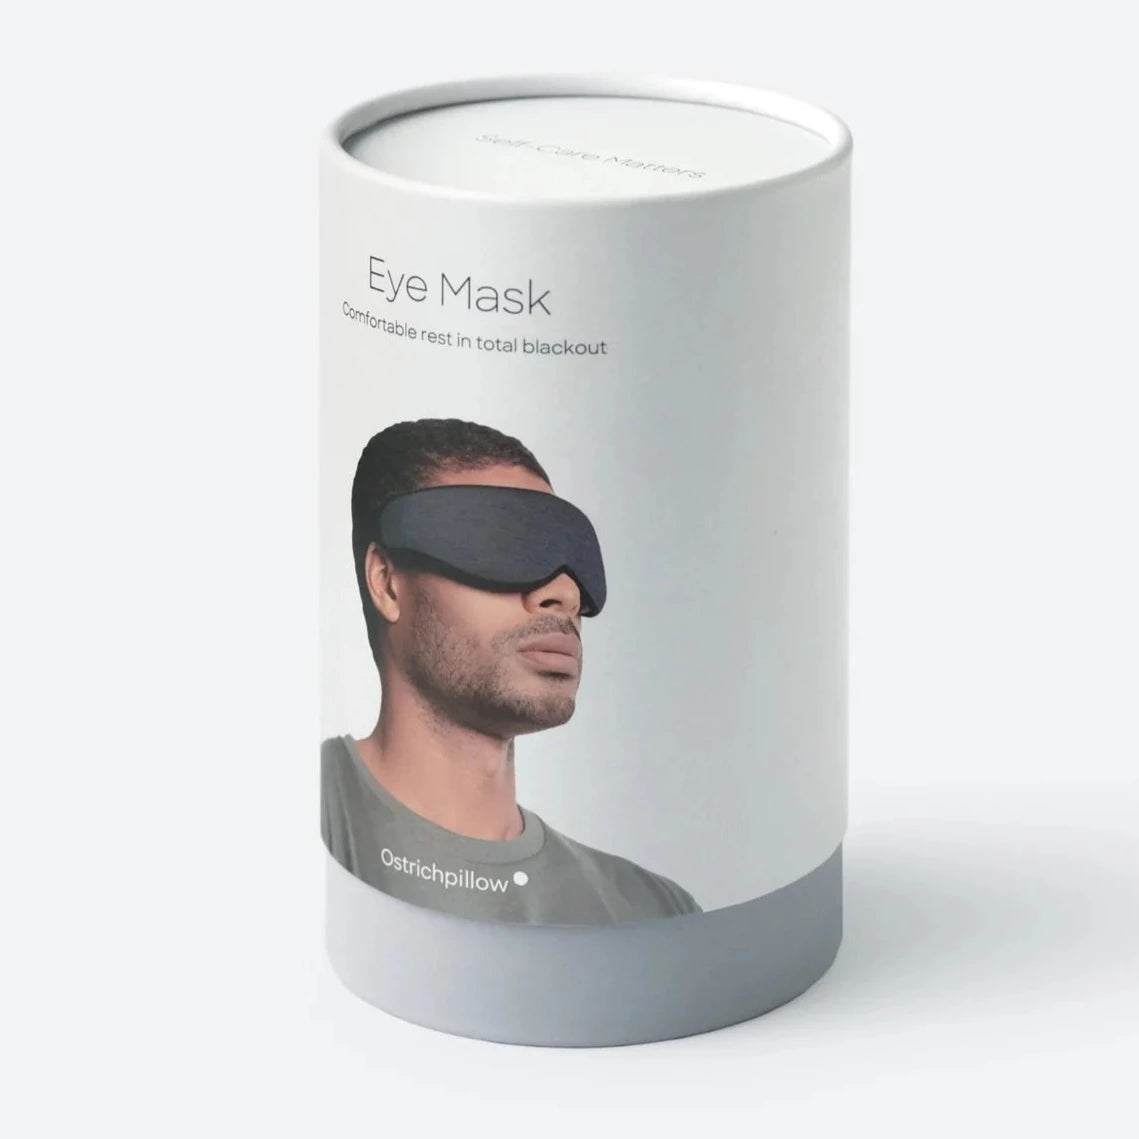 Eye mask packaging.